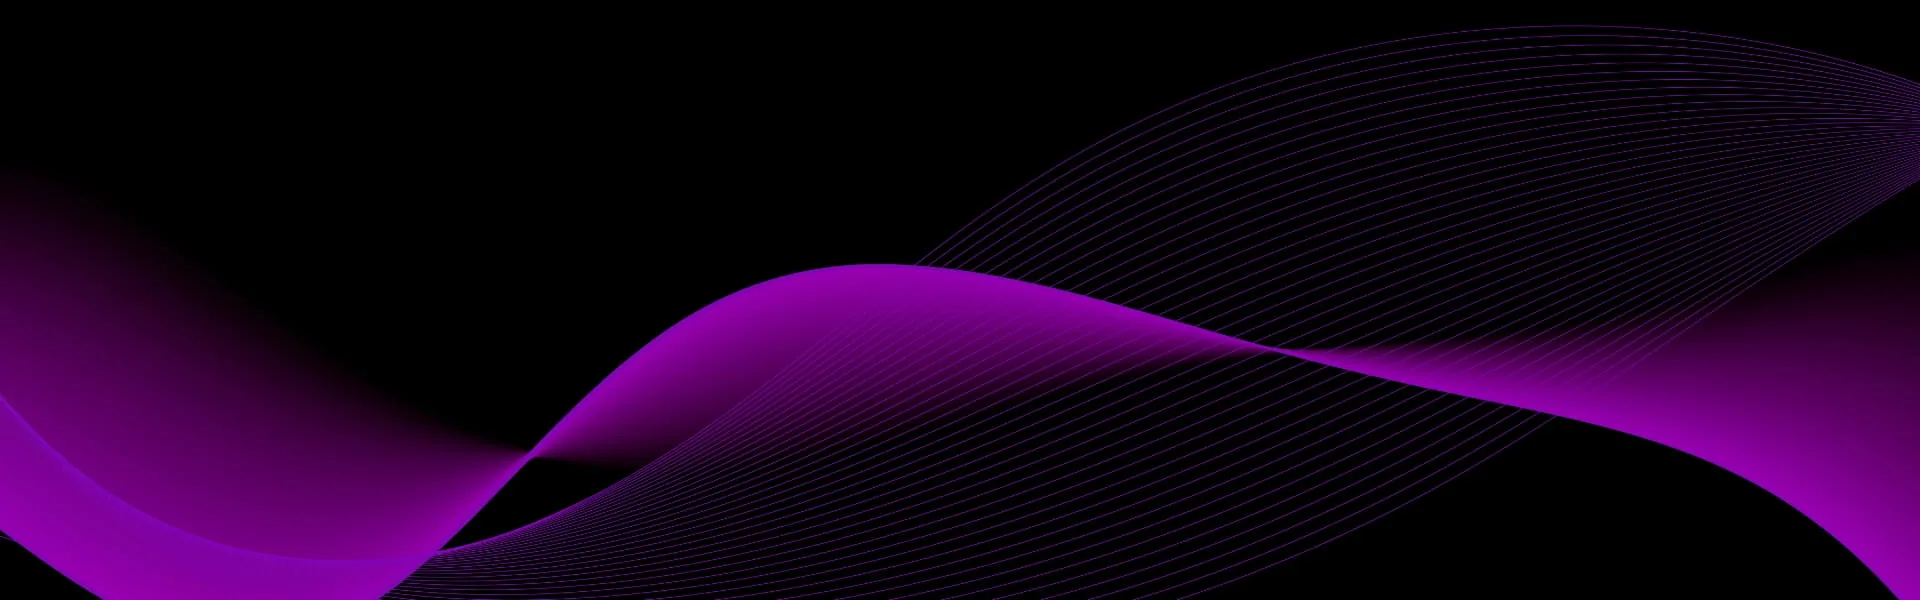 A purple wave on a black background, Kramer's Panta Rhei